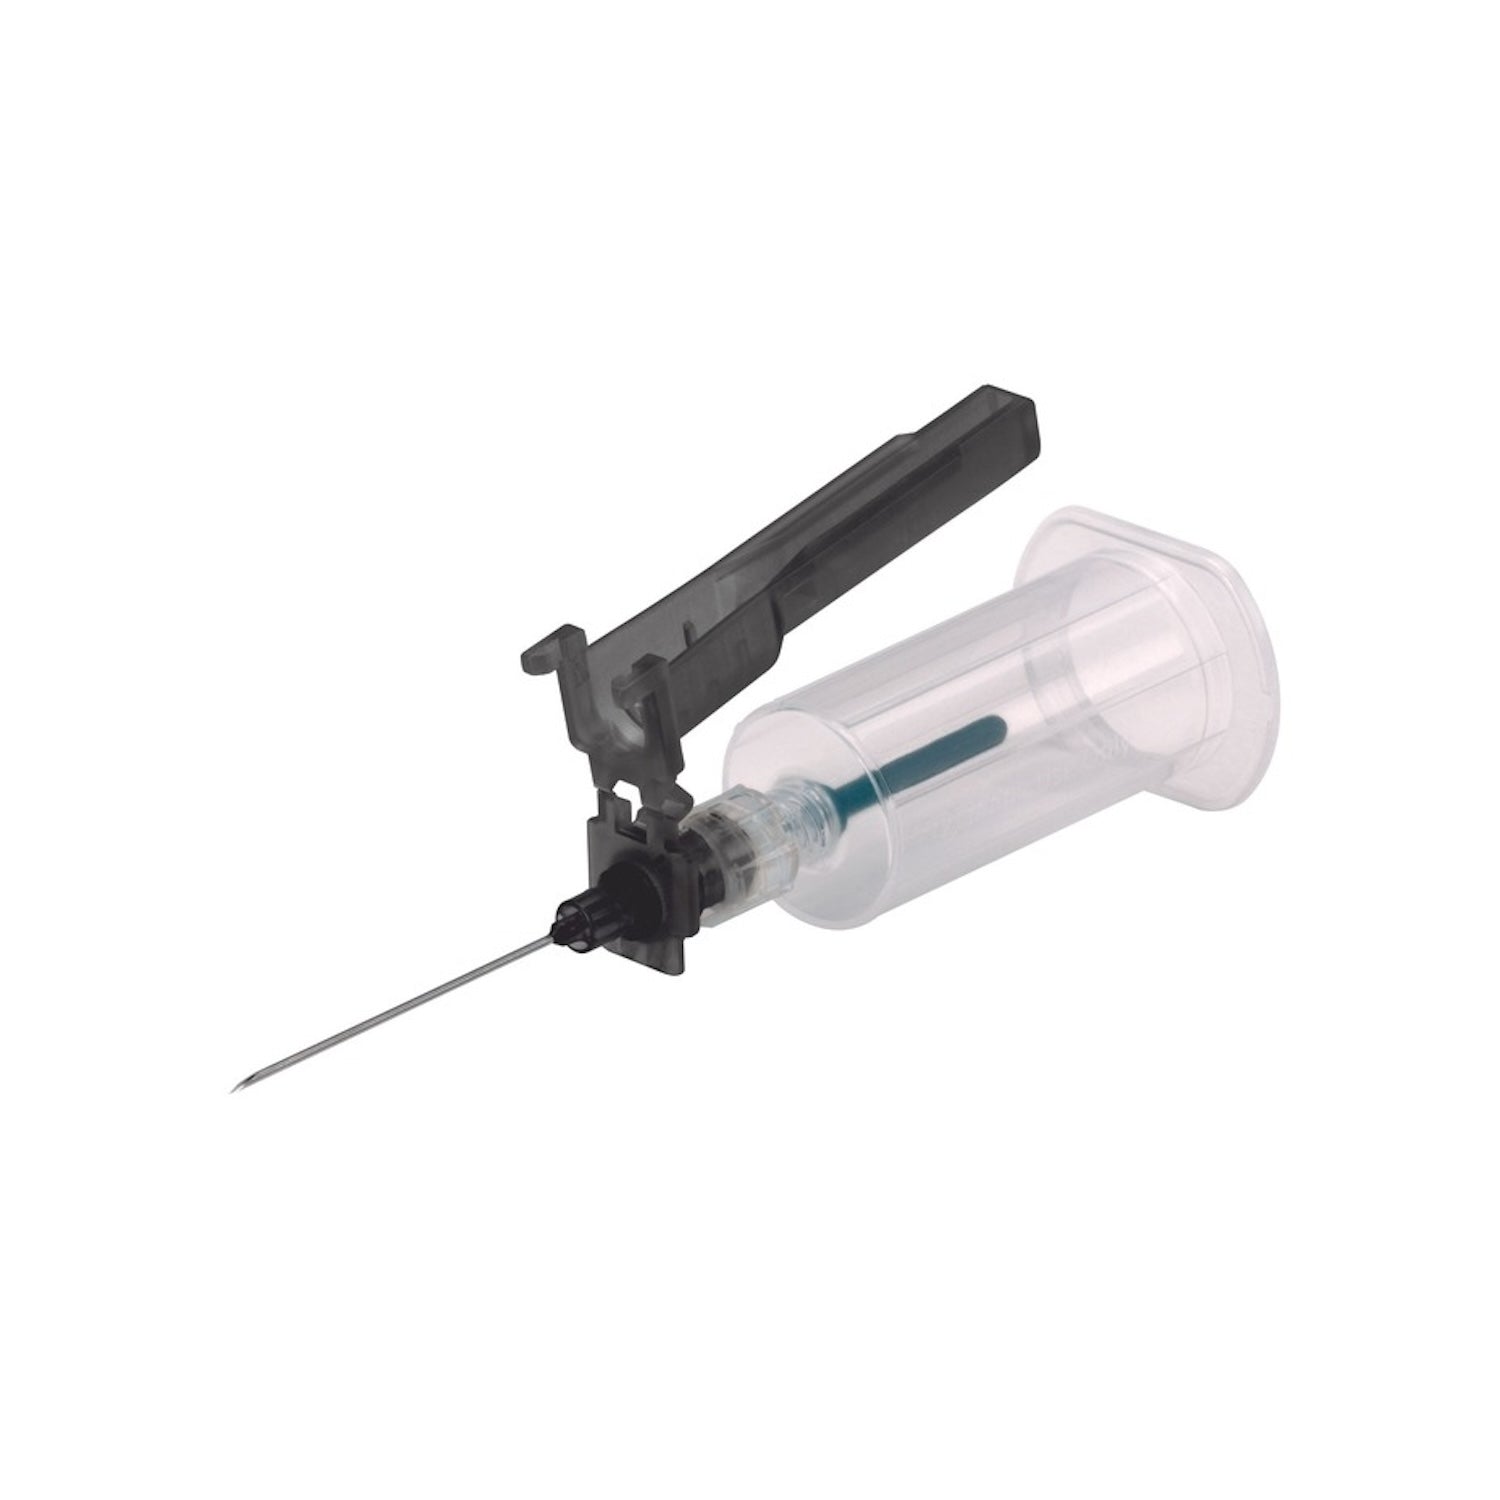 Unistik Vacuflip | 22G / 1.5" Needle with Holder | Pack of 50